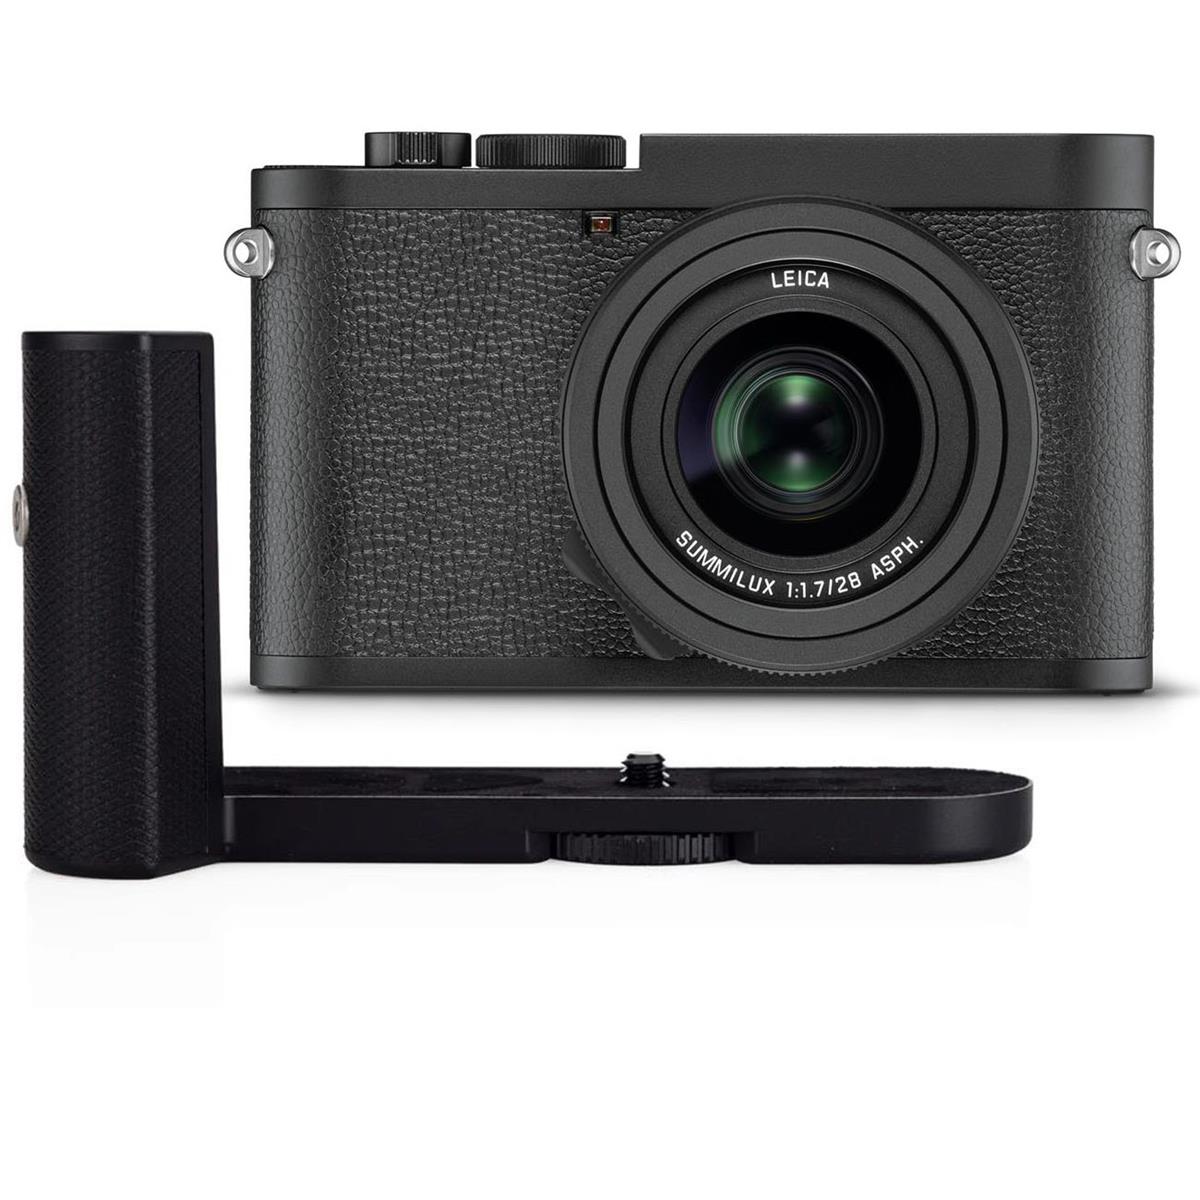 Image of Leica Q2 Monochrom Compact Camera with Leica Handgrip